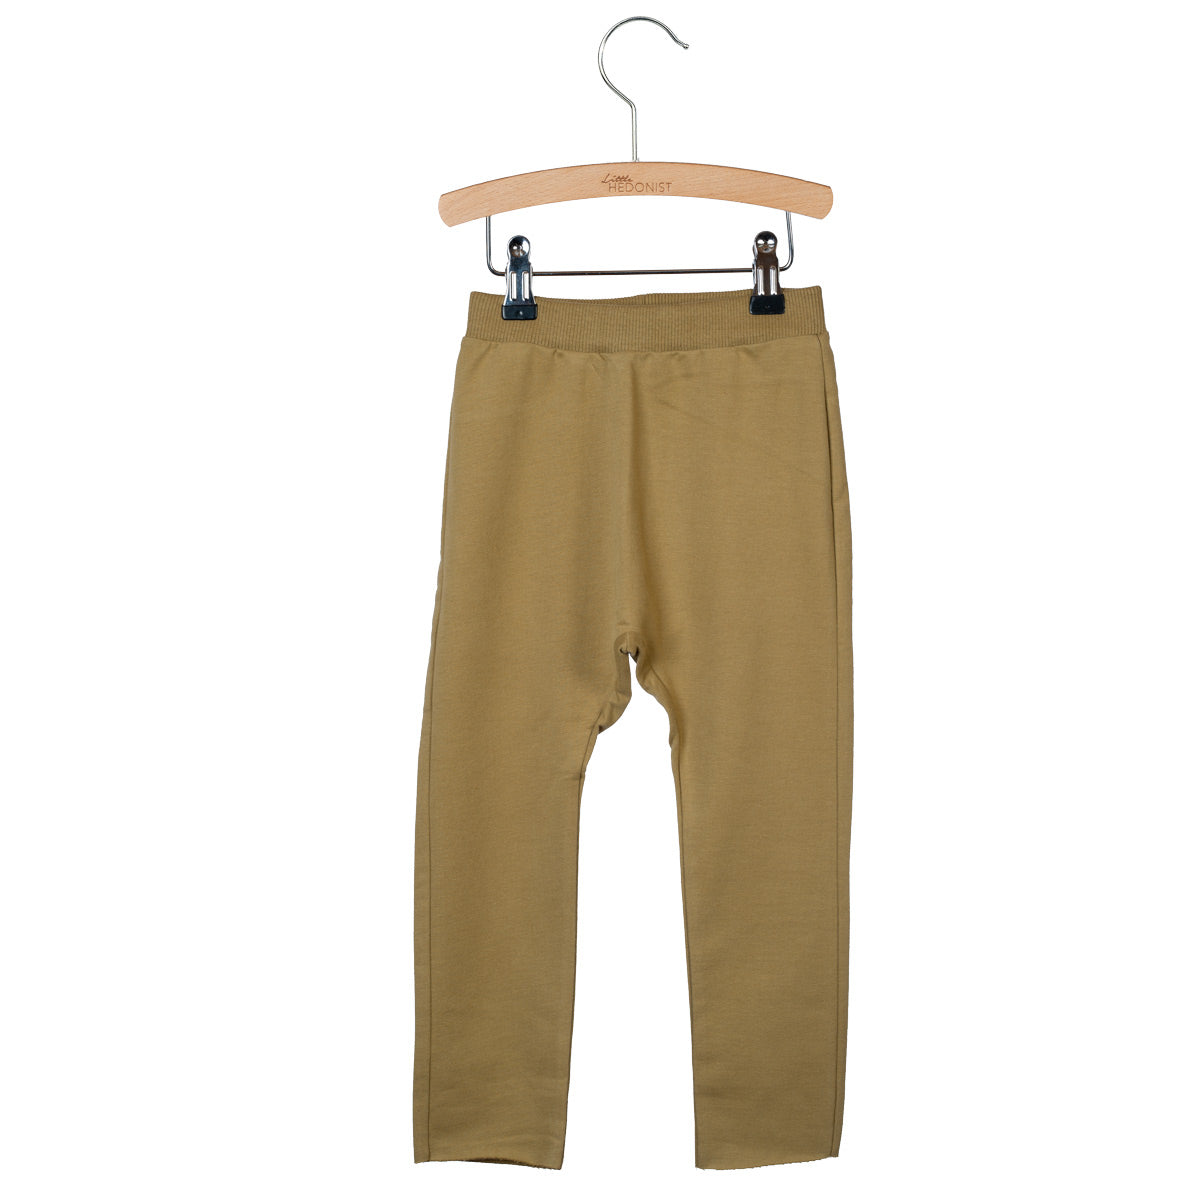 LITTLE HEDONIST - Pantalon vert confortable ample neuf - 12 mois